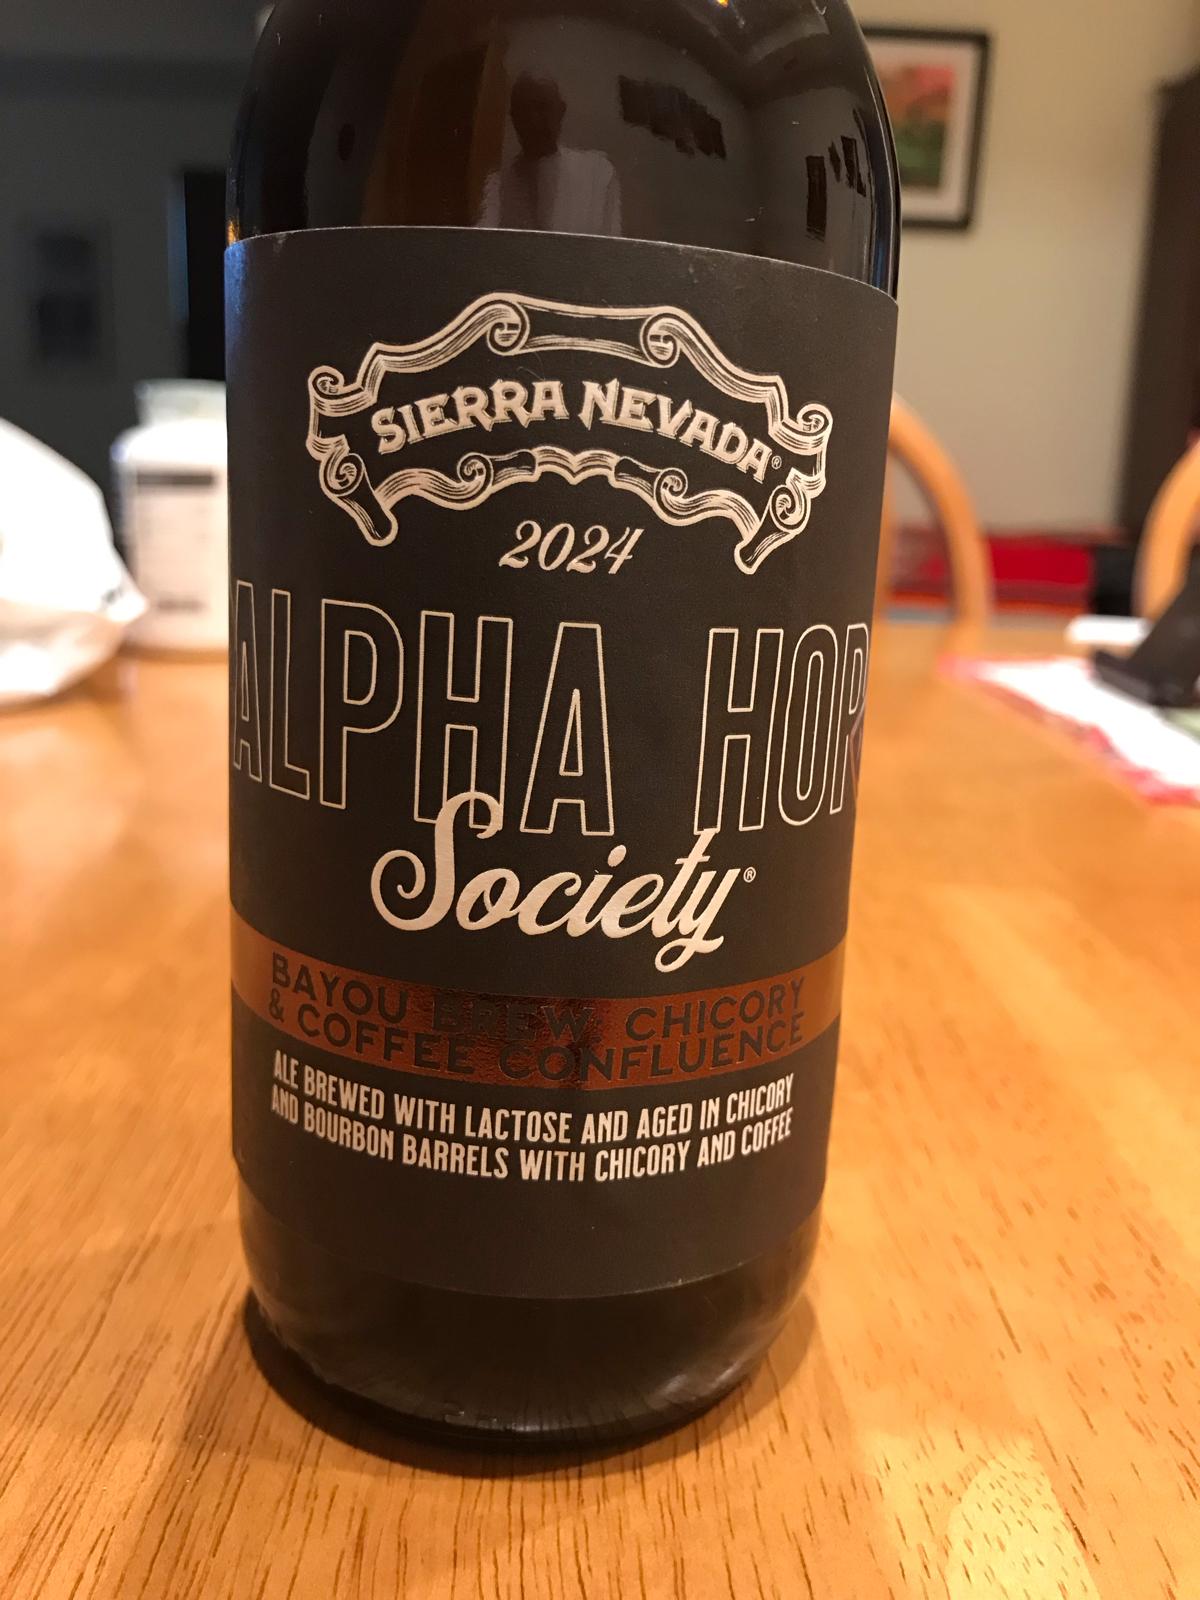 Alpha Hop Society: Bayou Brew - Chicory & Coffee Confluence